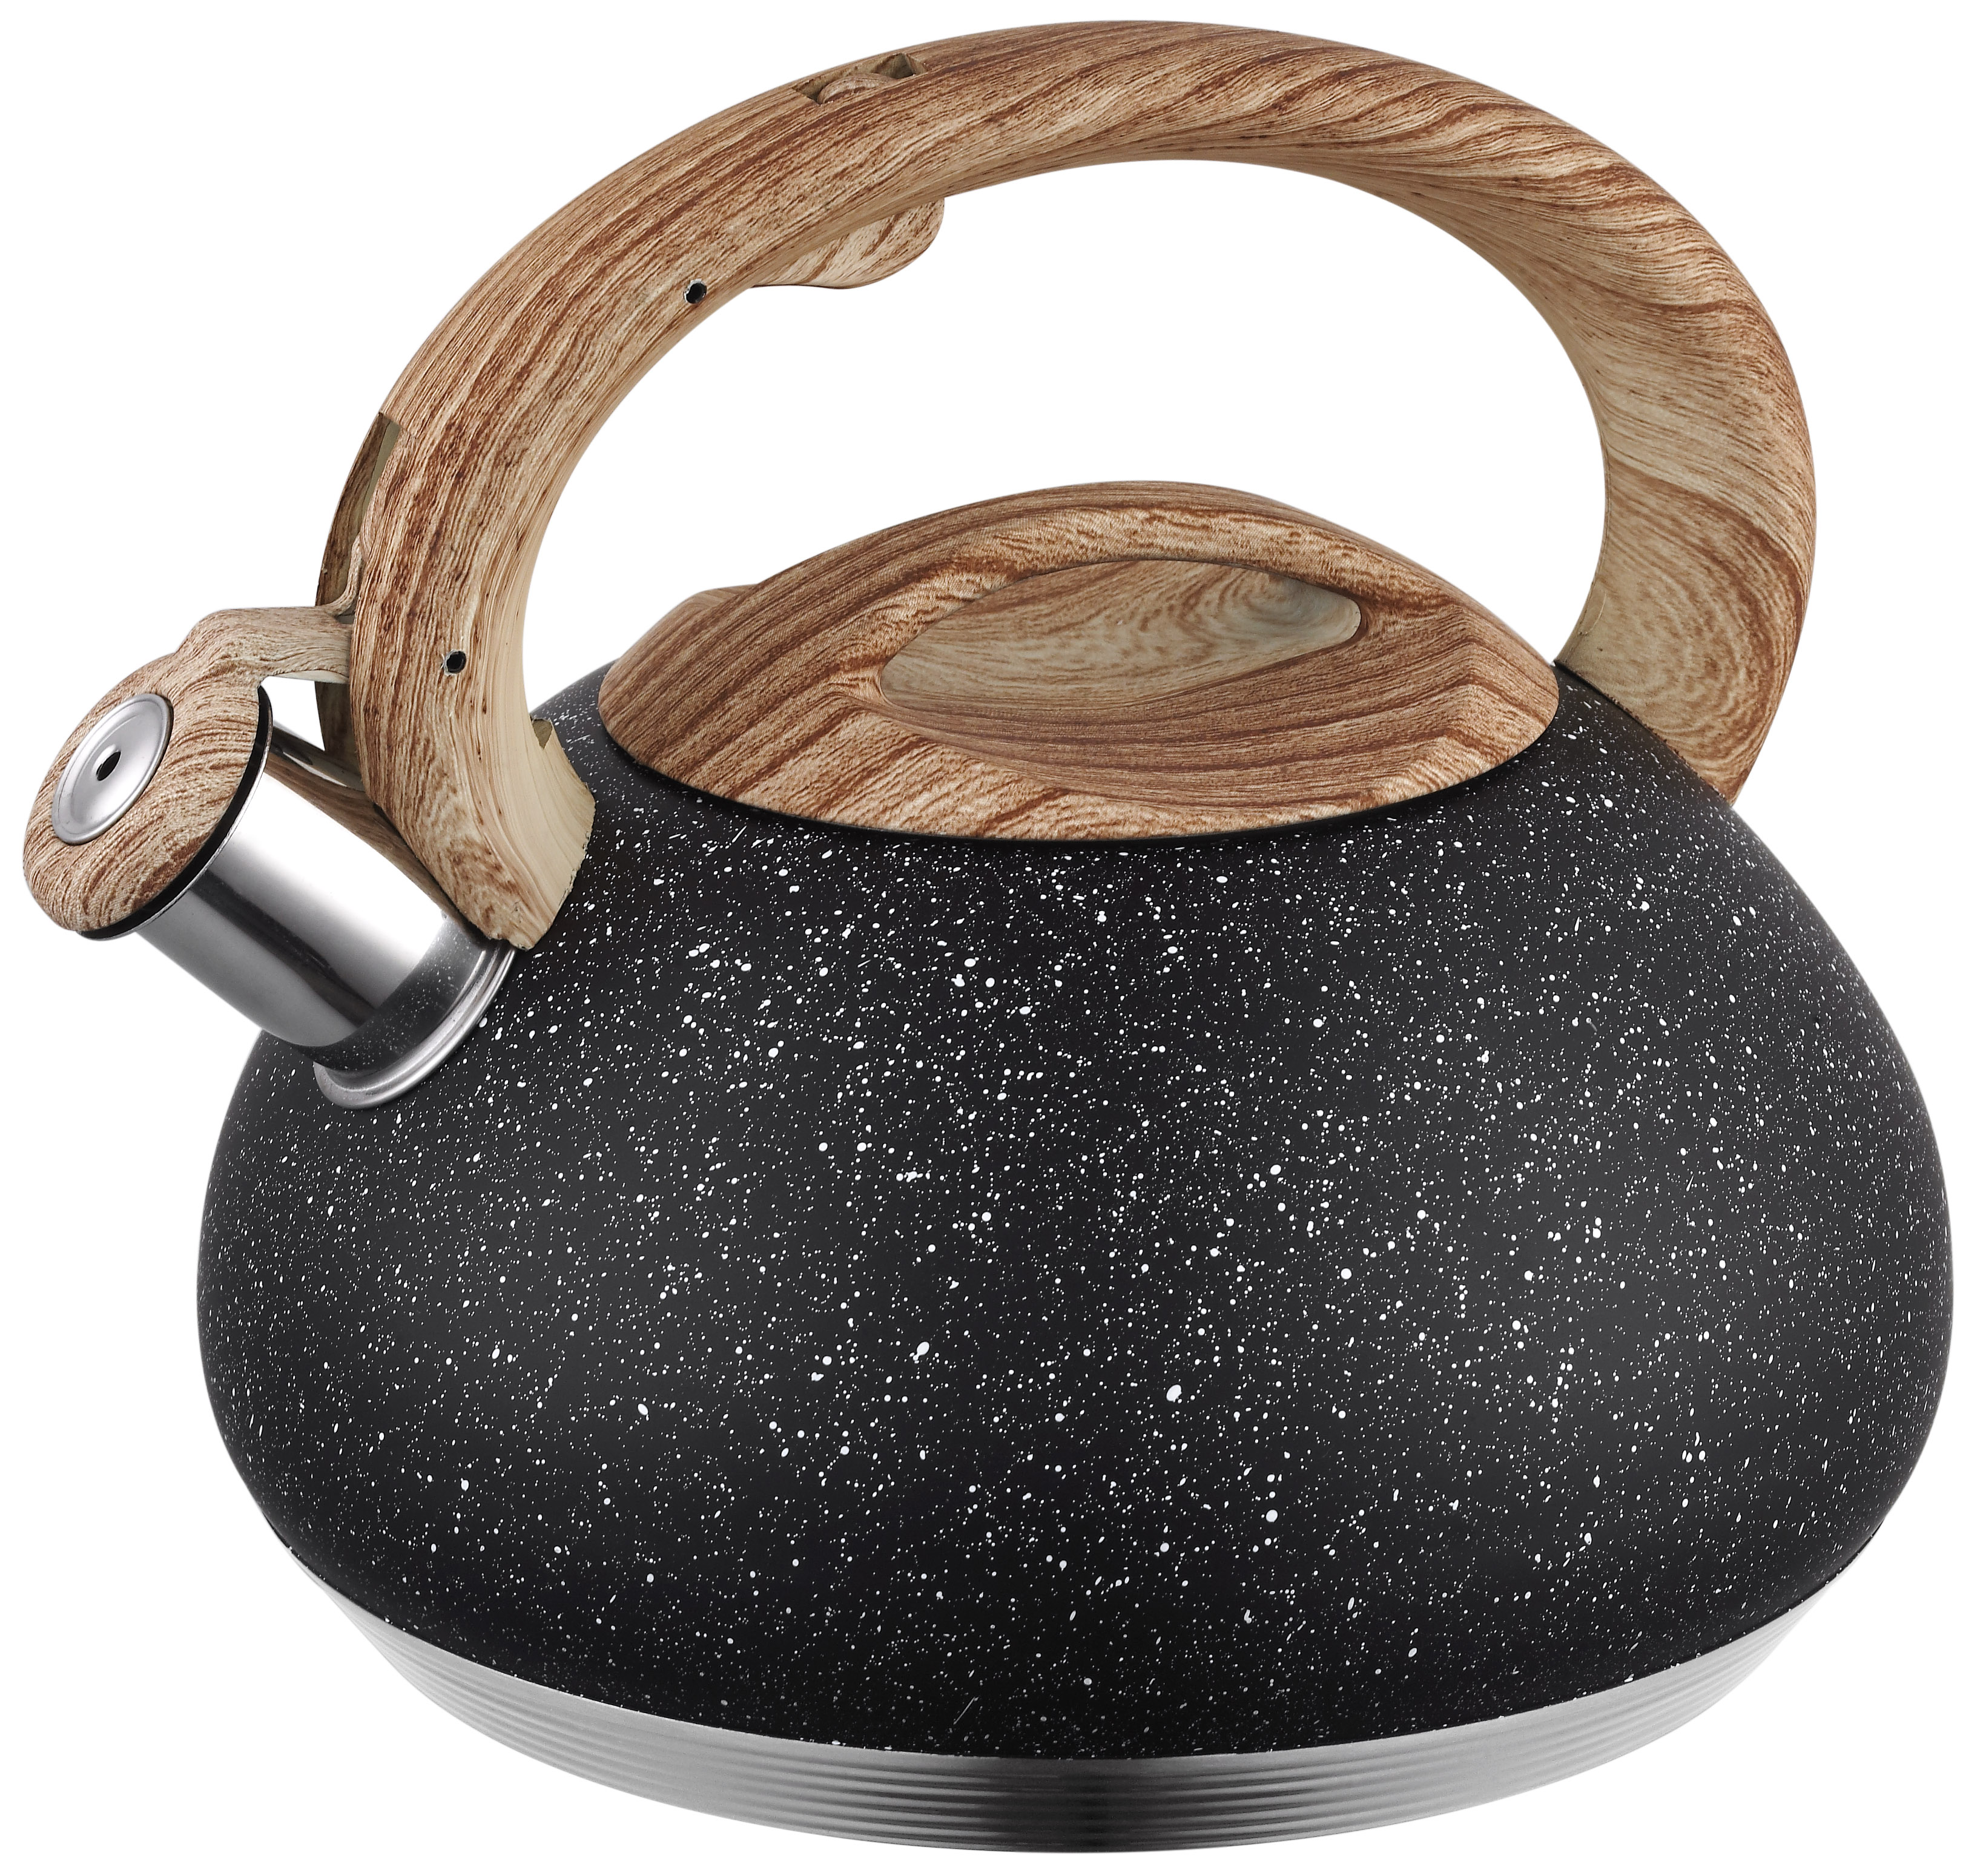  New design Stove Top Stainless Steel Whistling Tea Kettle Tea Pot